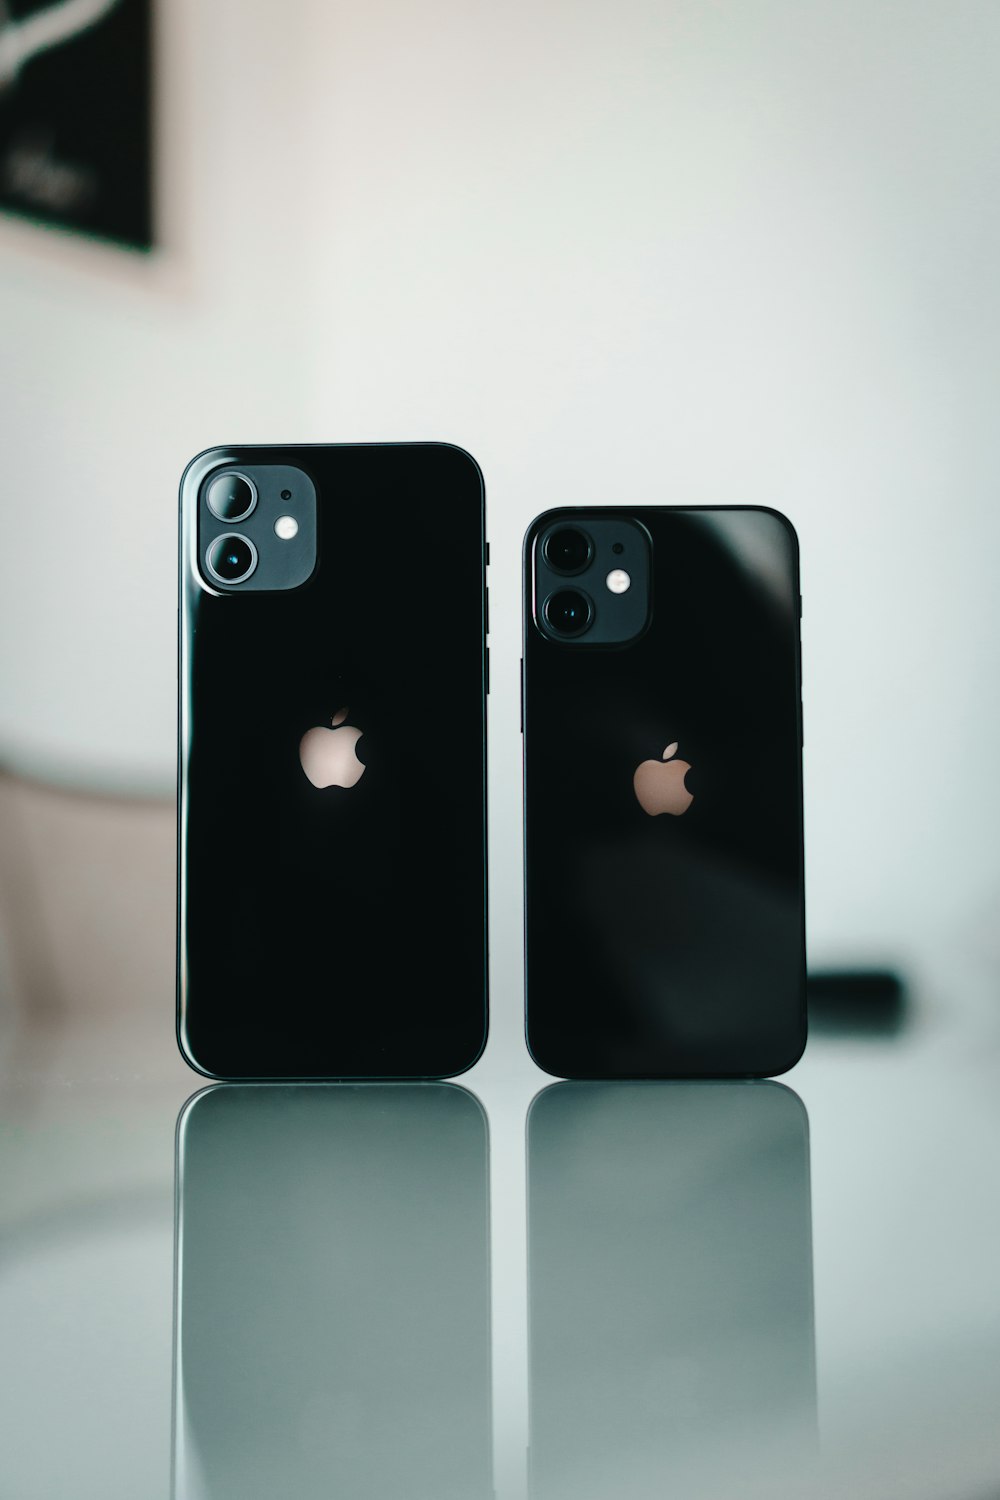 Foto Iphone 7 plus negro con funda blanca y negra – Imagen Iphone oscuro  gratis en Unsplash